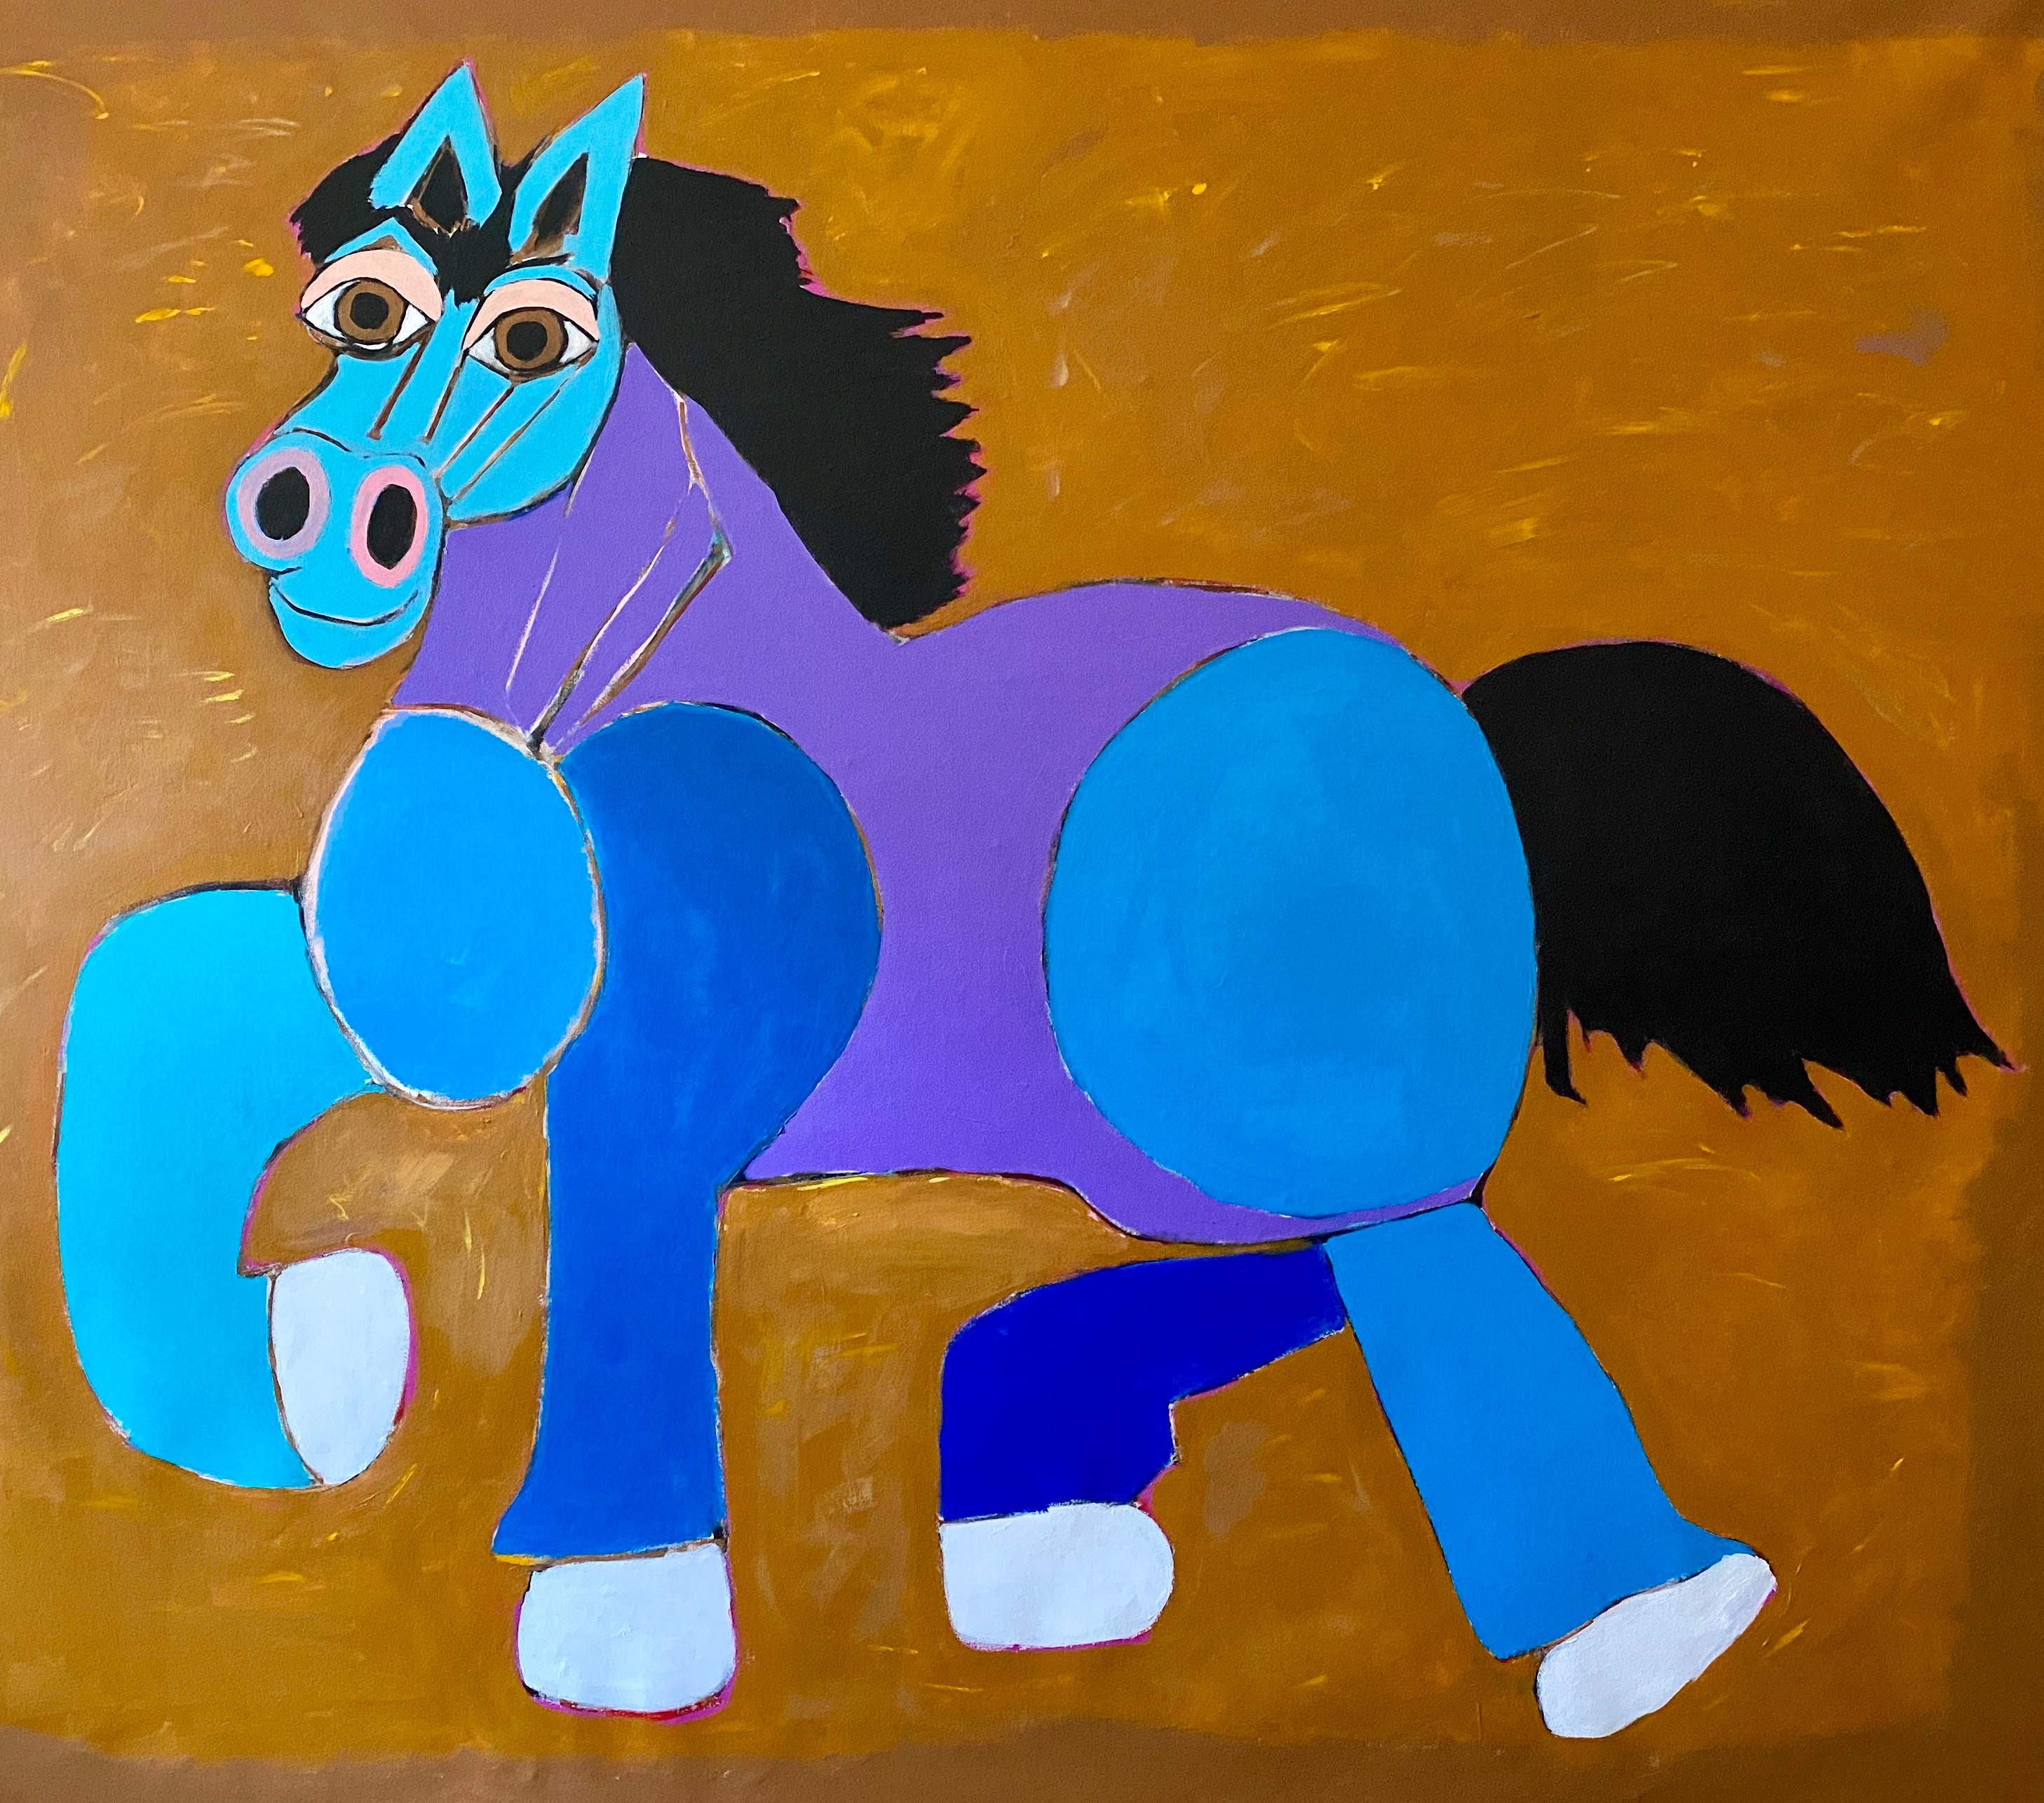 Melinda McLeod Animal Painting - "Disfruto the Horse" Acrylic Painting on Canvas 